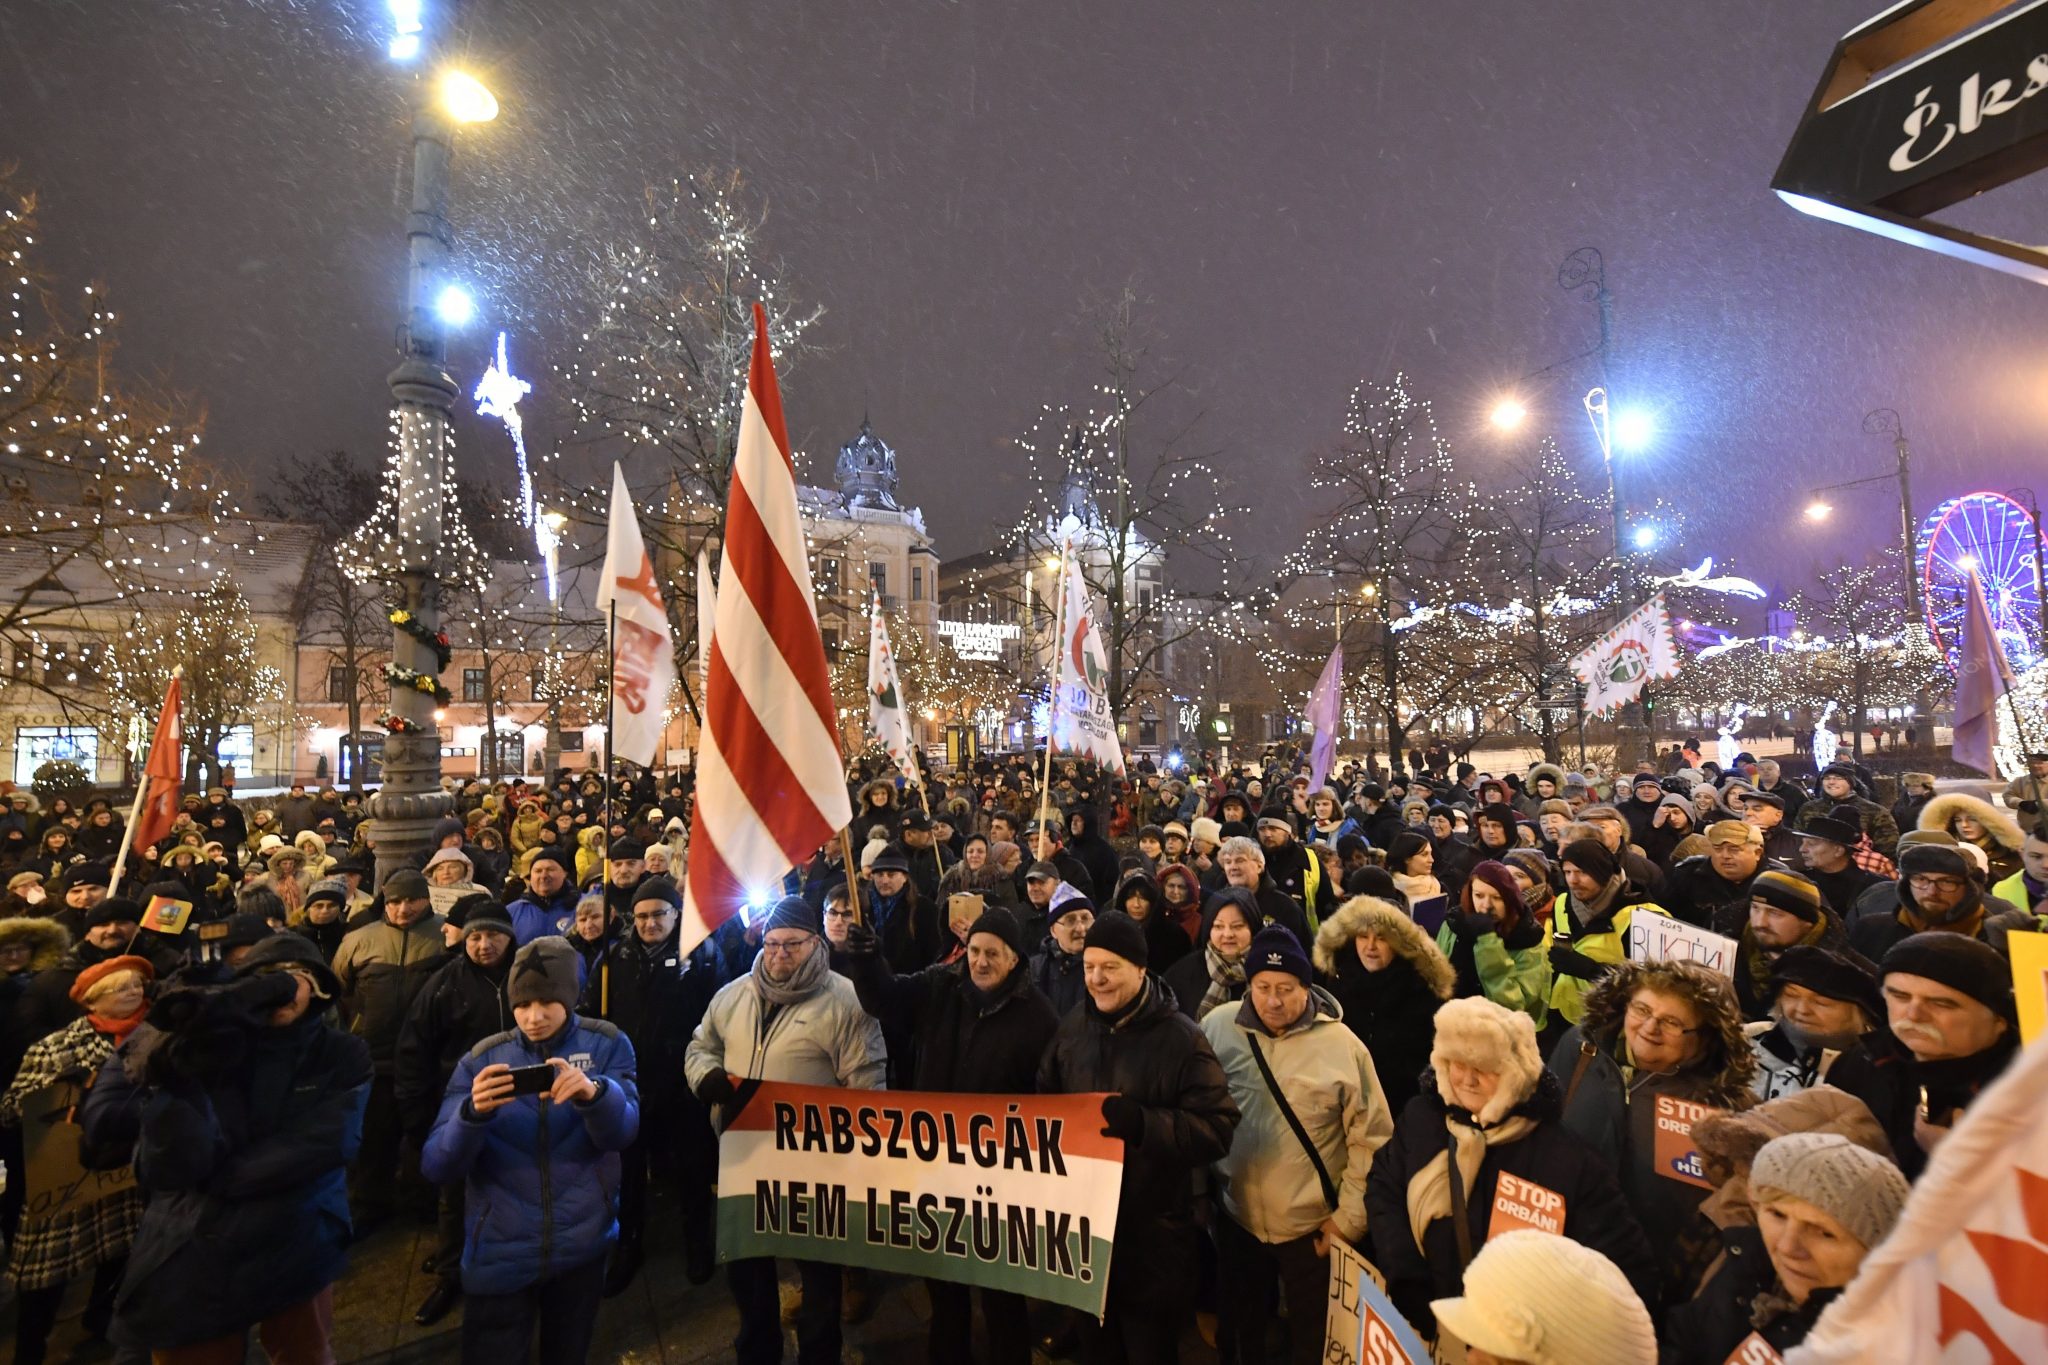 Debrecen demonstration